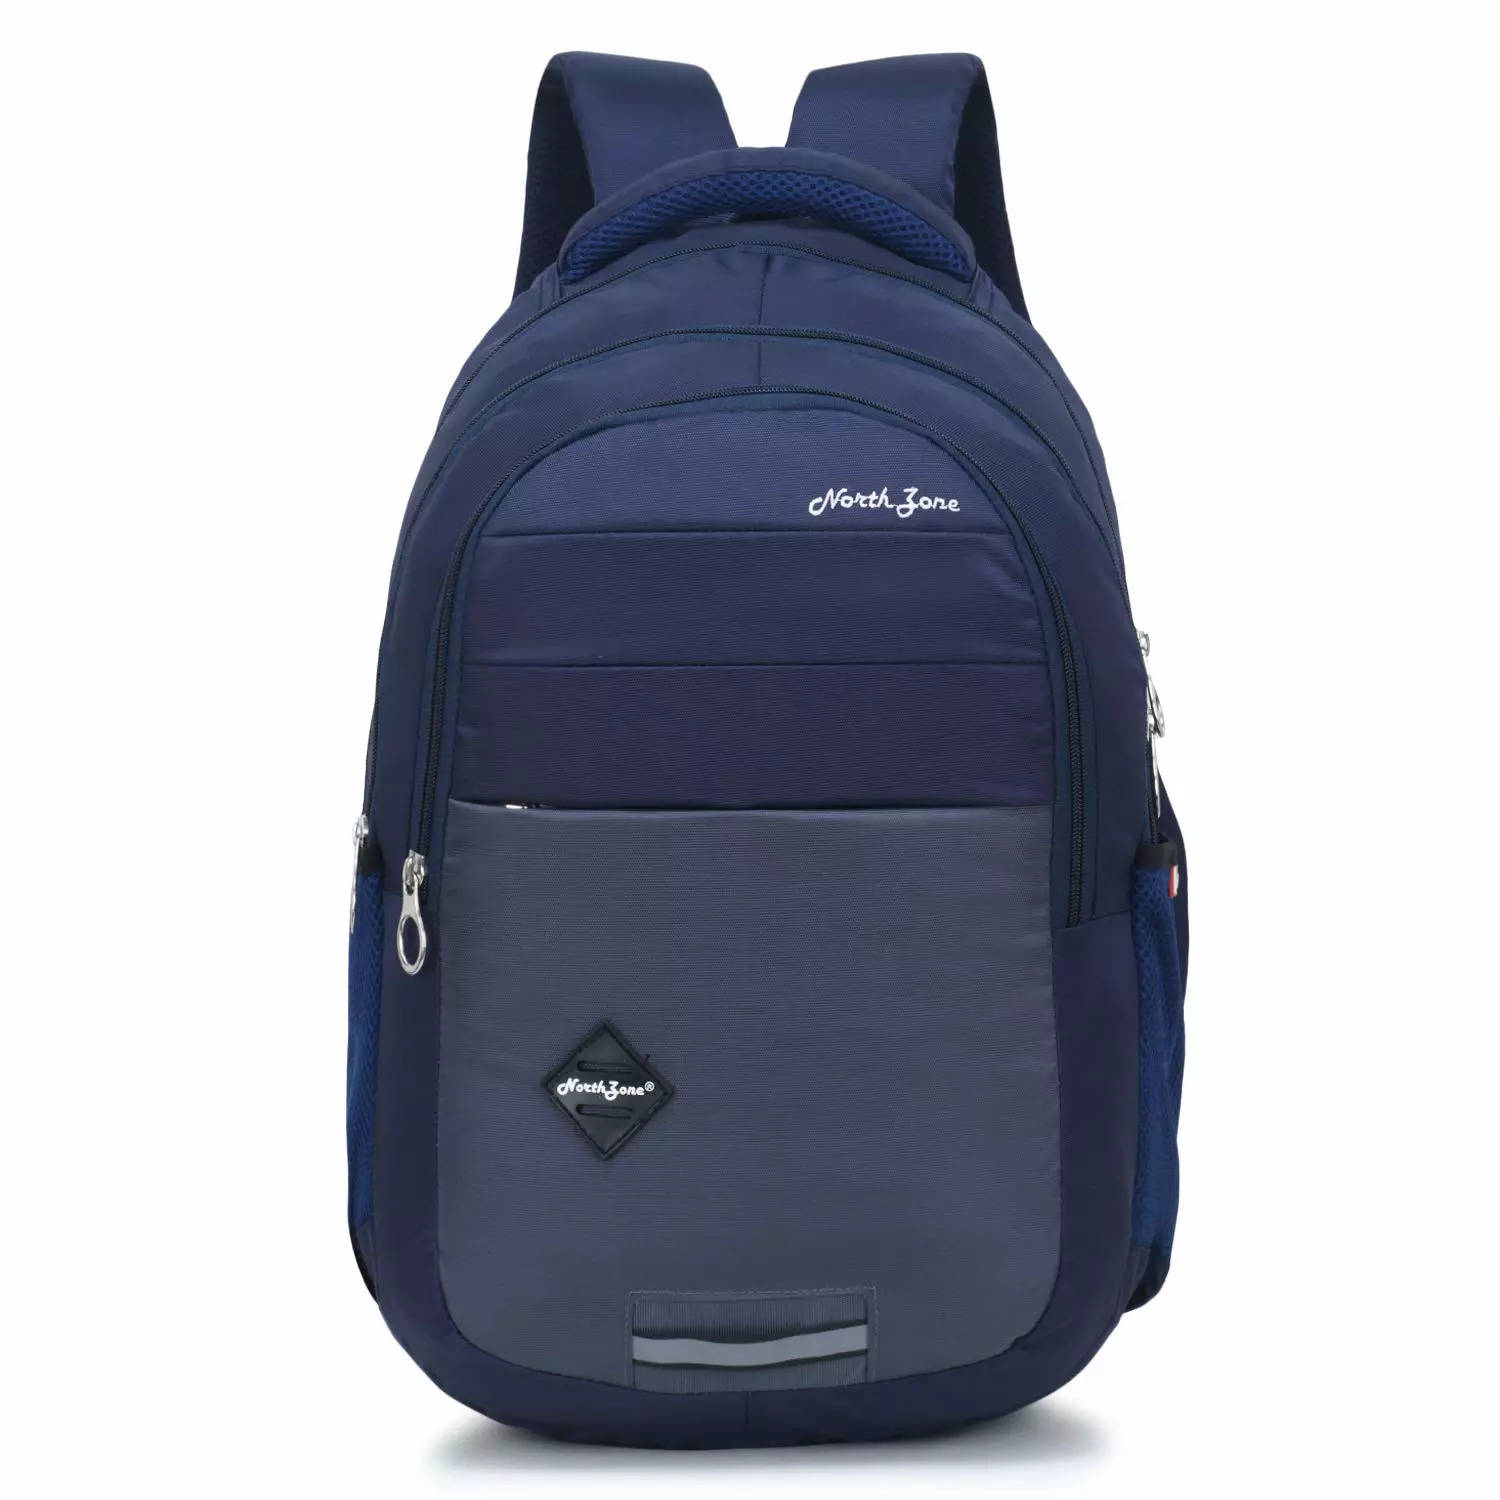 10 Best School Backpacks For Elementary School Students - Facts.net